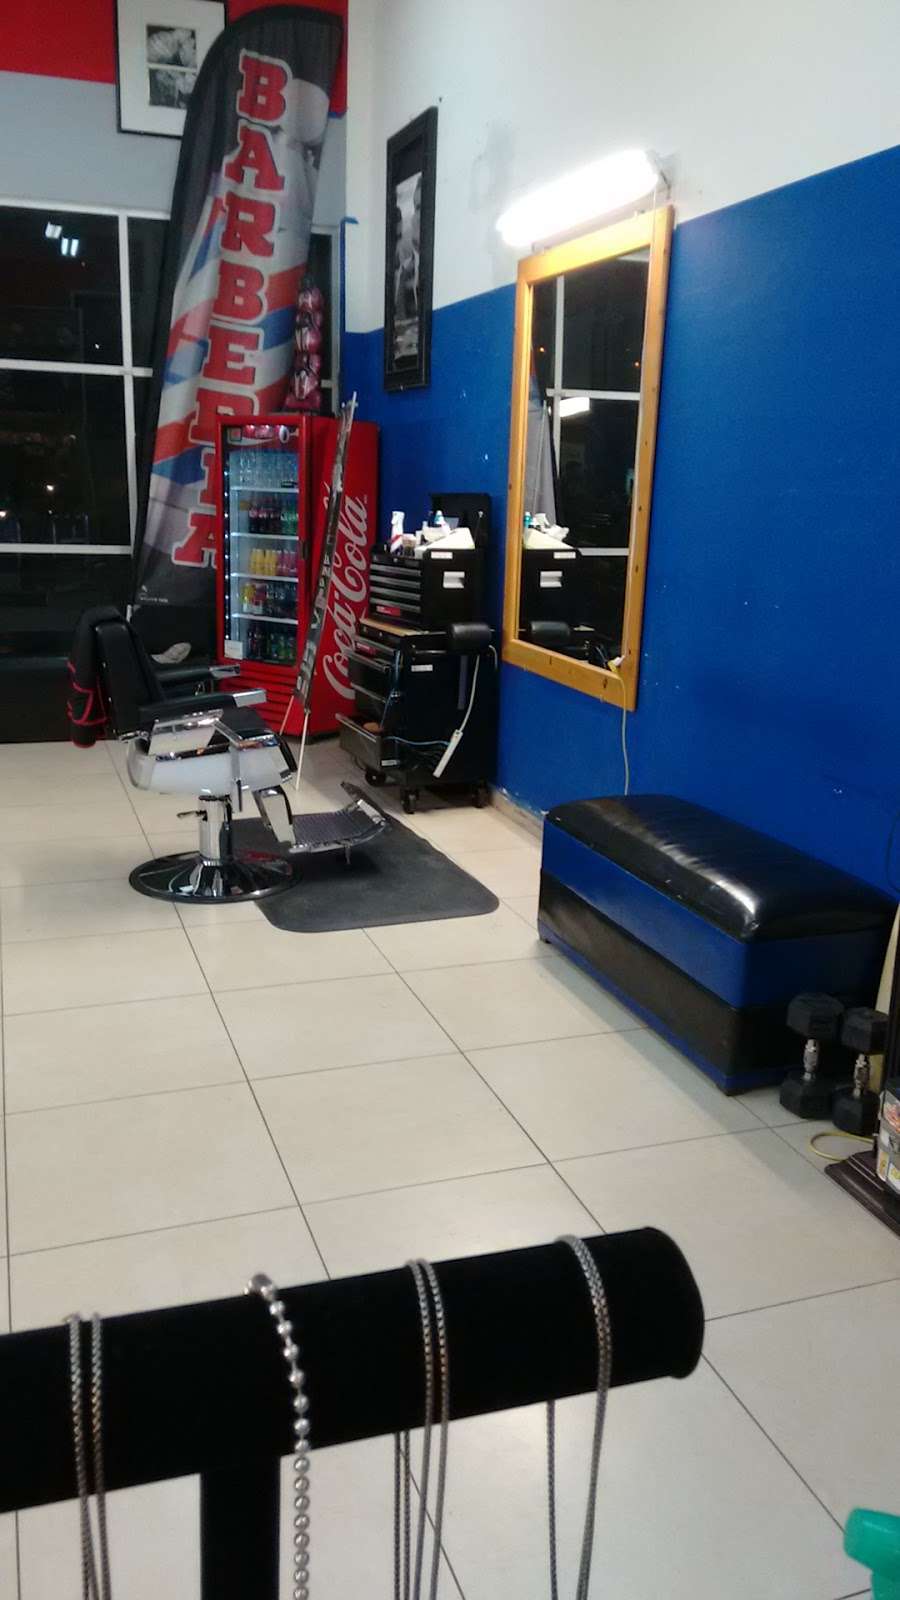 O7 Barbershop | Boulevard Cuauhtemoc Sur. #7589 local#1, Tejamen, 22635 Tijuana, B.C., Mexico | Phone: 664 900 3988